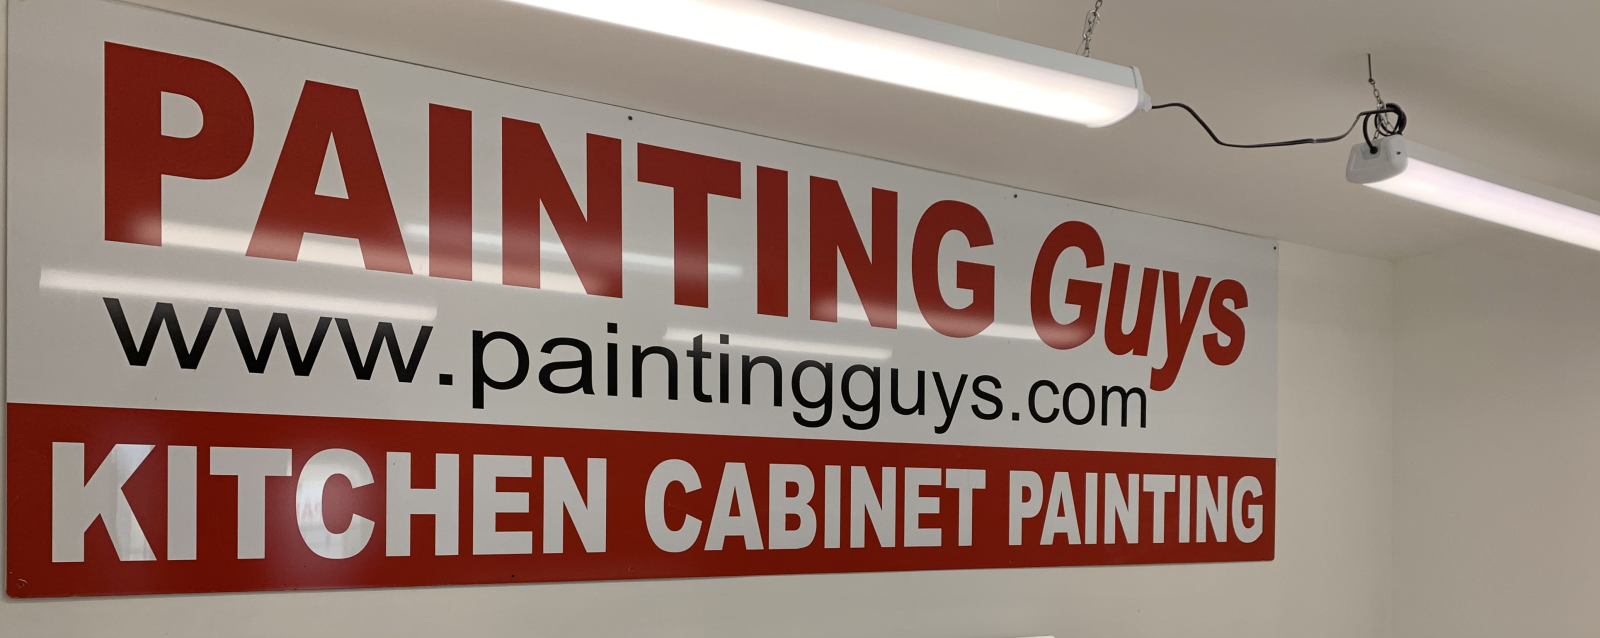 PAINTING Guys kitchen cabinet painting Bonnyville, Cold Lake, St Paul, Lac La Biche